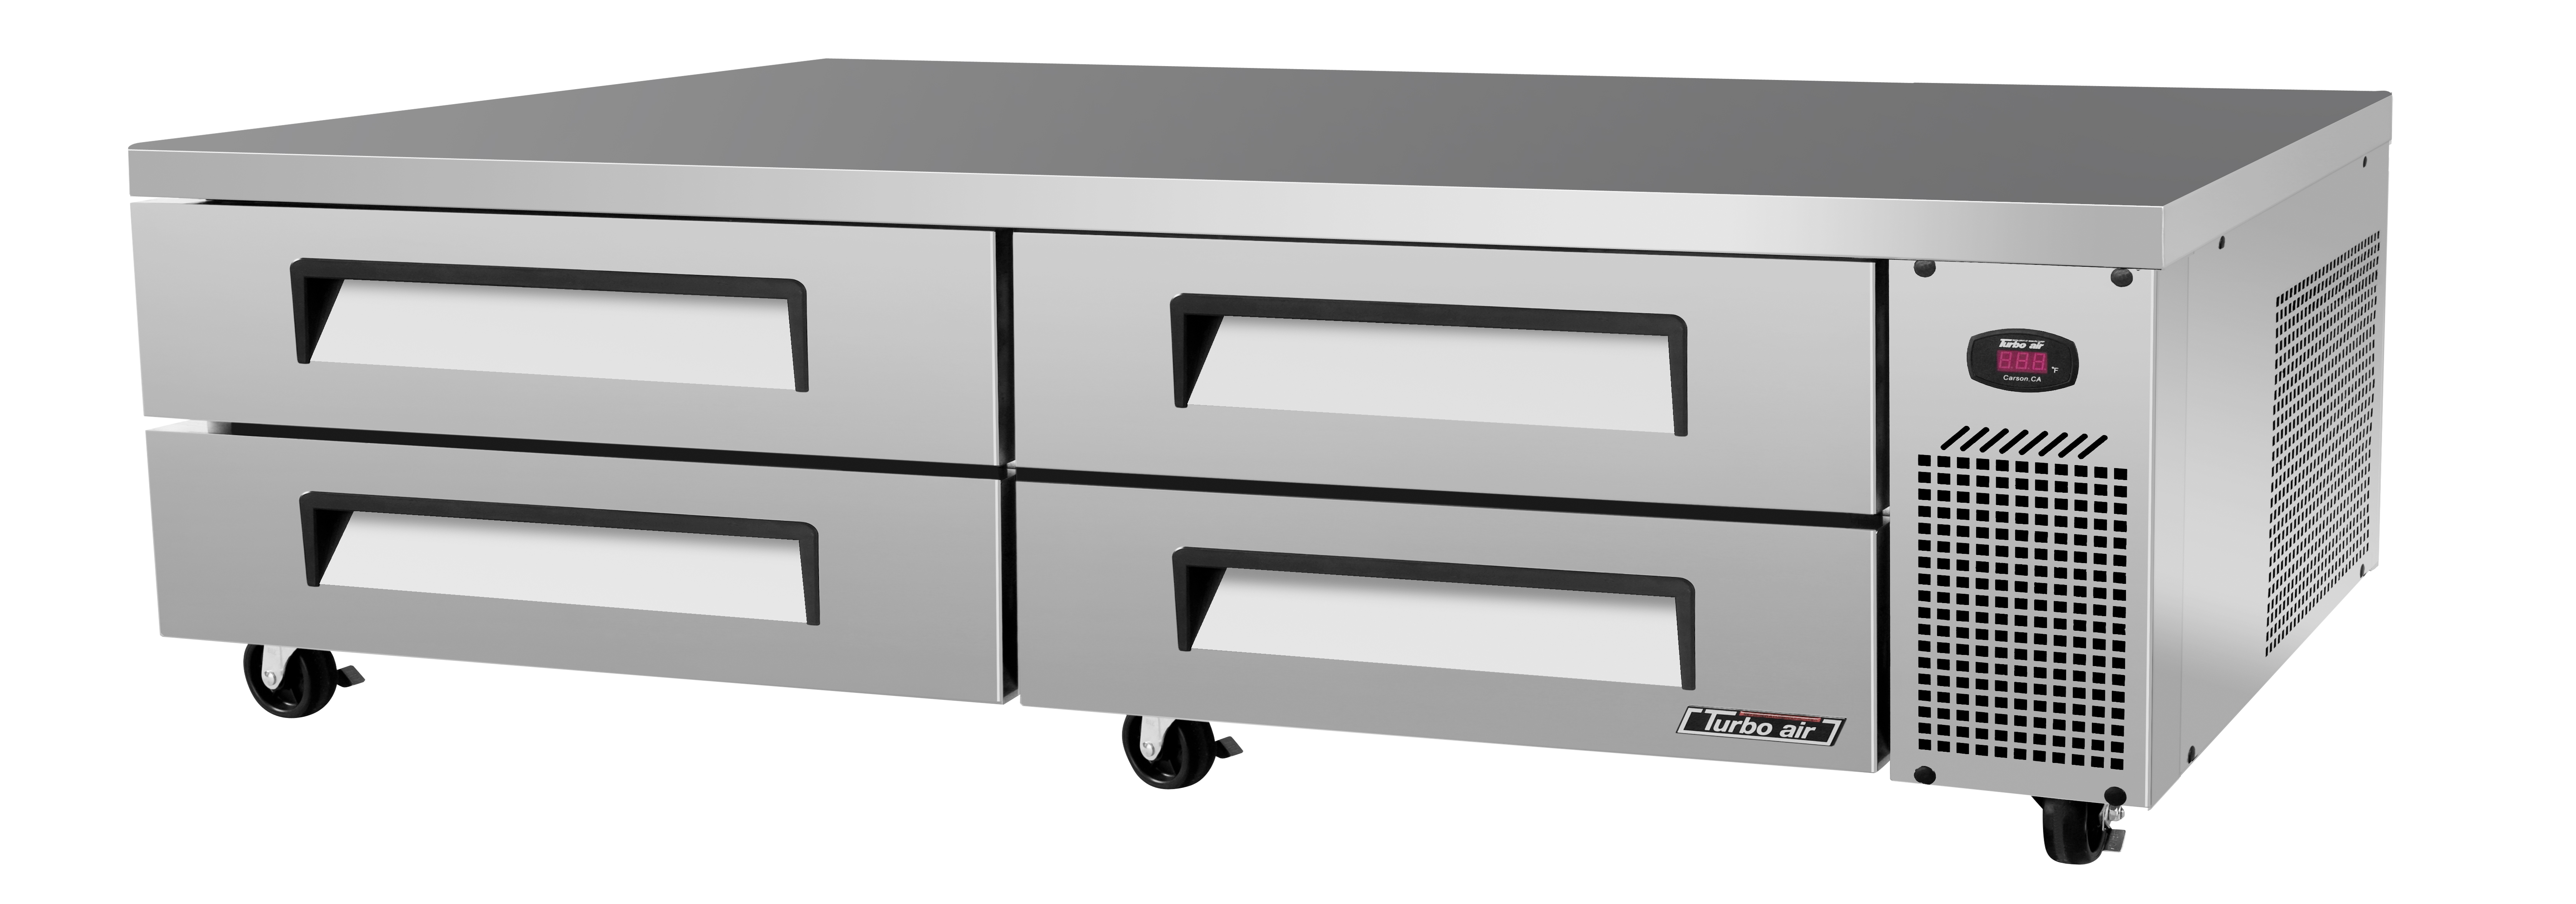 Super Deluxe Chef Base Refrigerator 23.0 cu. Ft